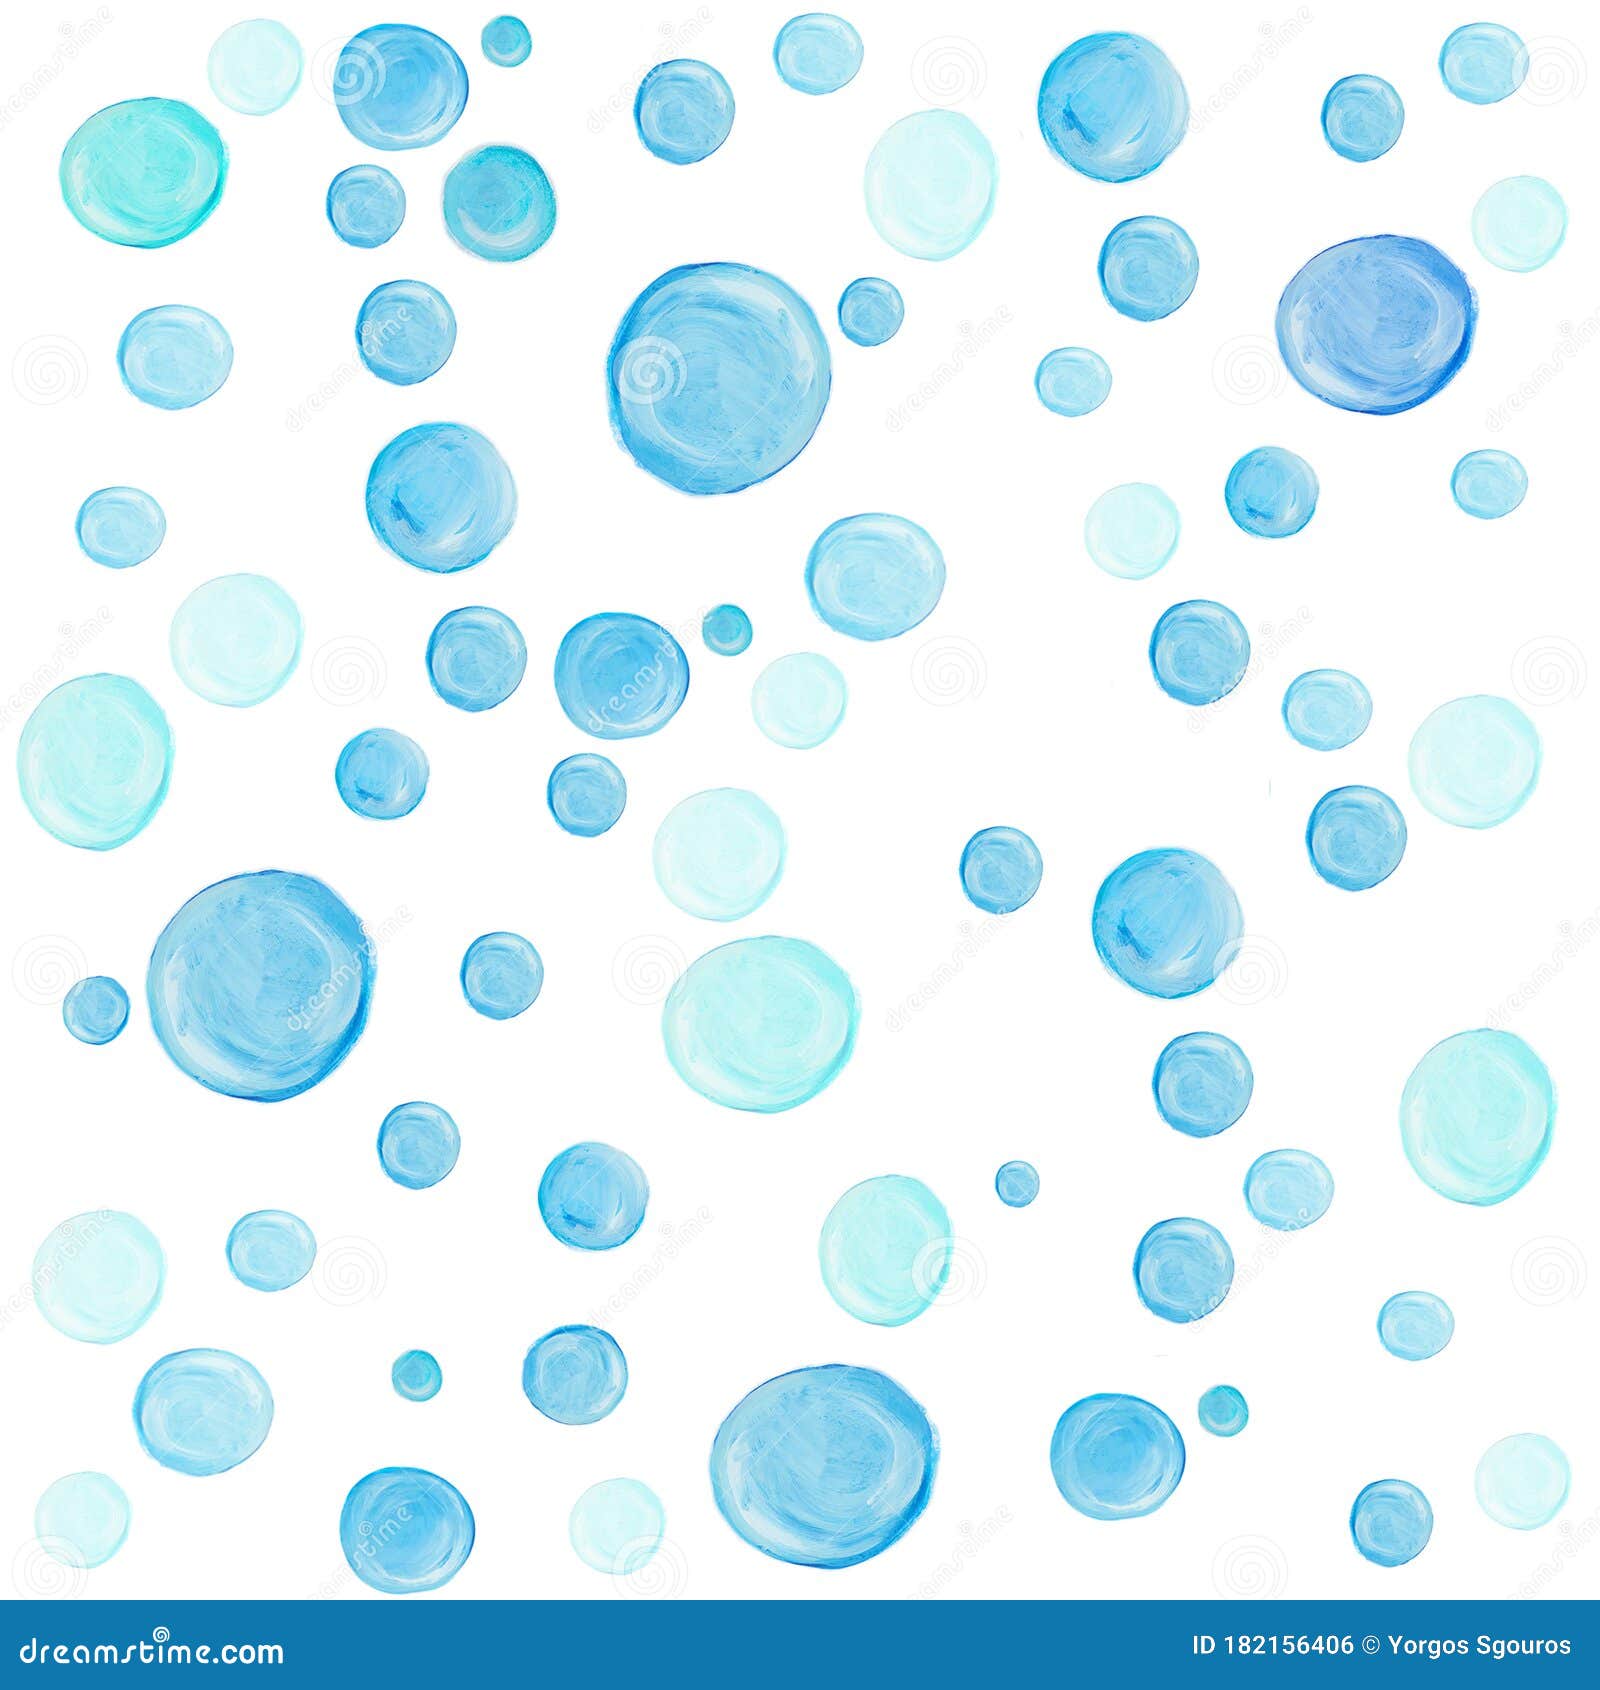 Bright Blue Hand Drawn Bubbles Stock Illustration - Illustration of ...